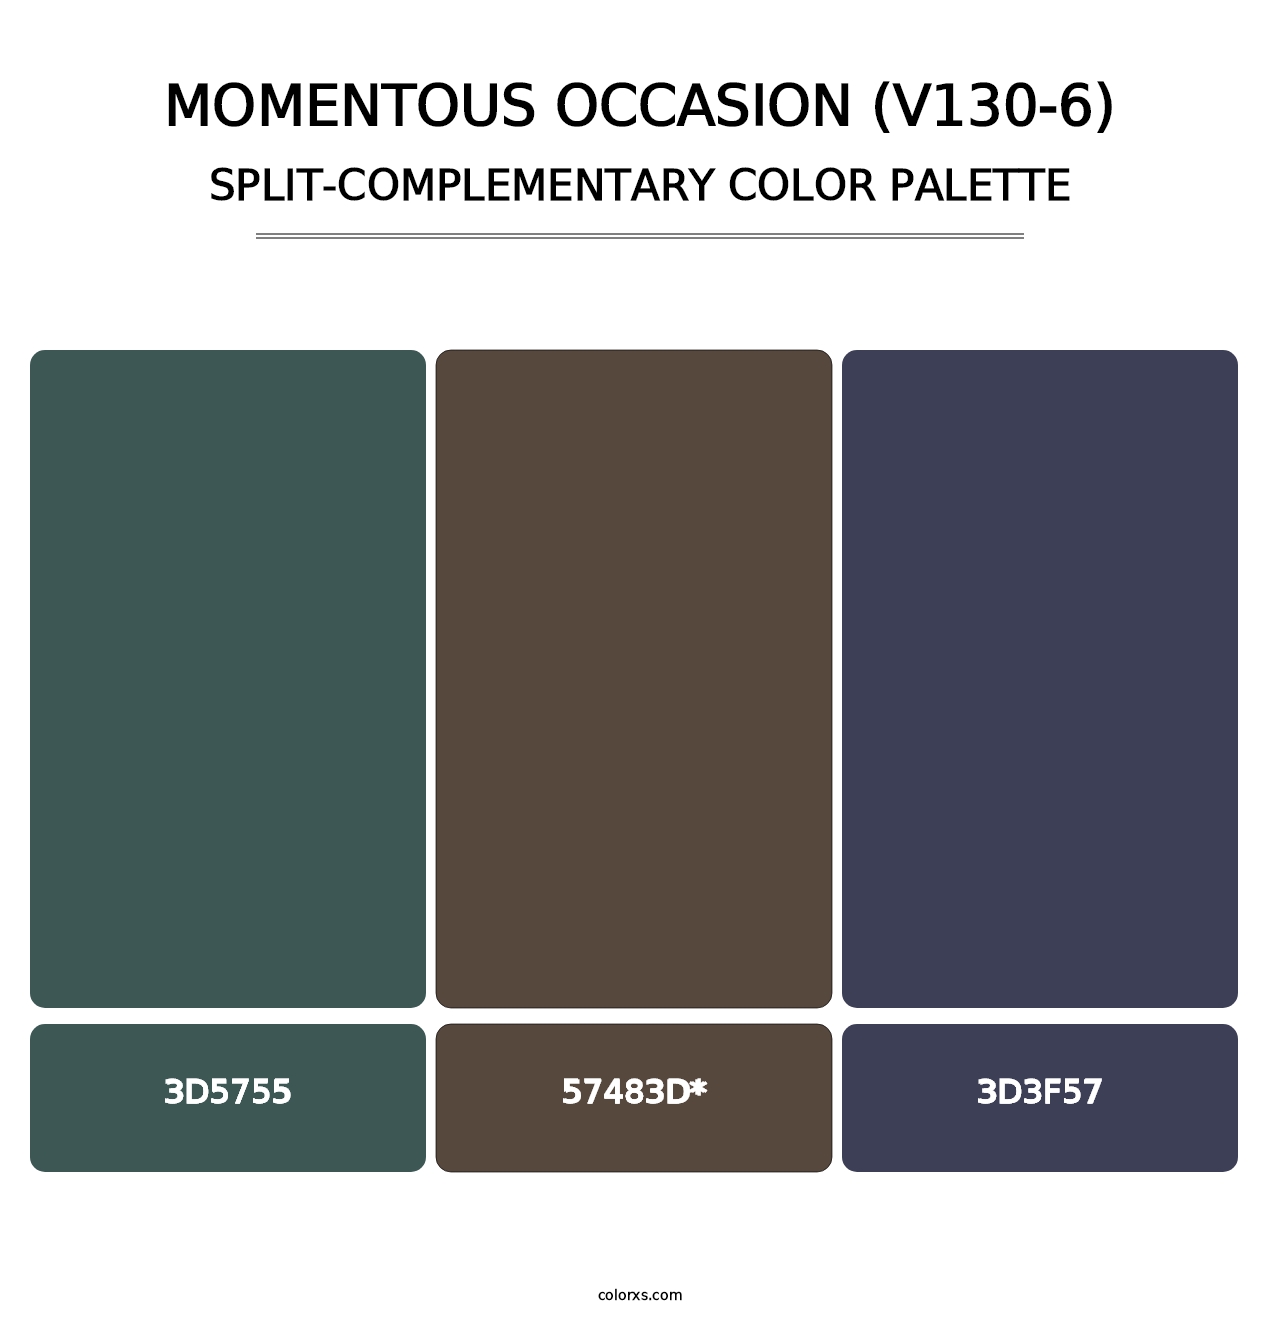 Momentous Occasion (V130-6) - Split-Complementary Color Palette